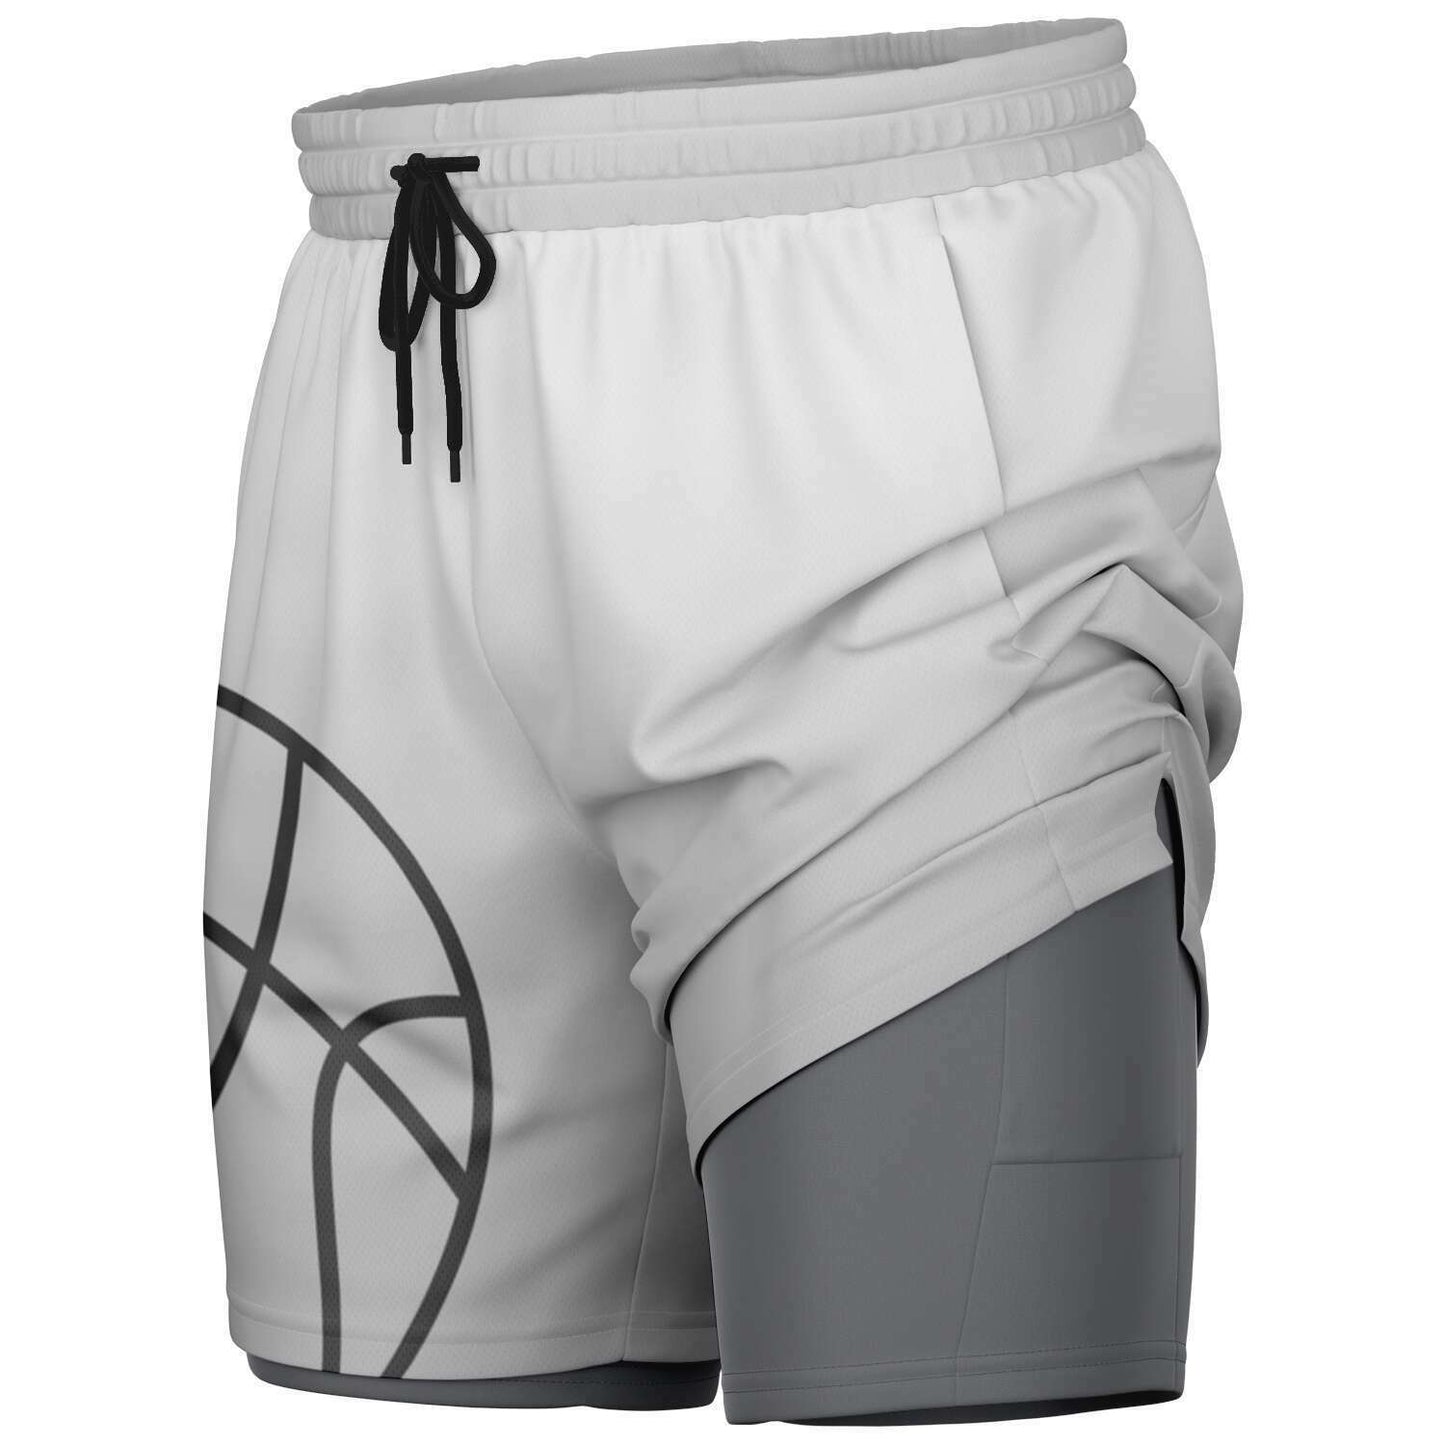 Duntalk "Doodle" Men's 2-in-1 Shorts - Grey